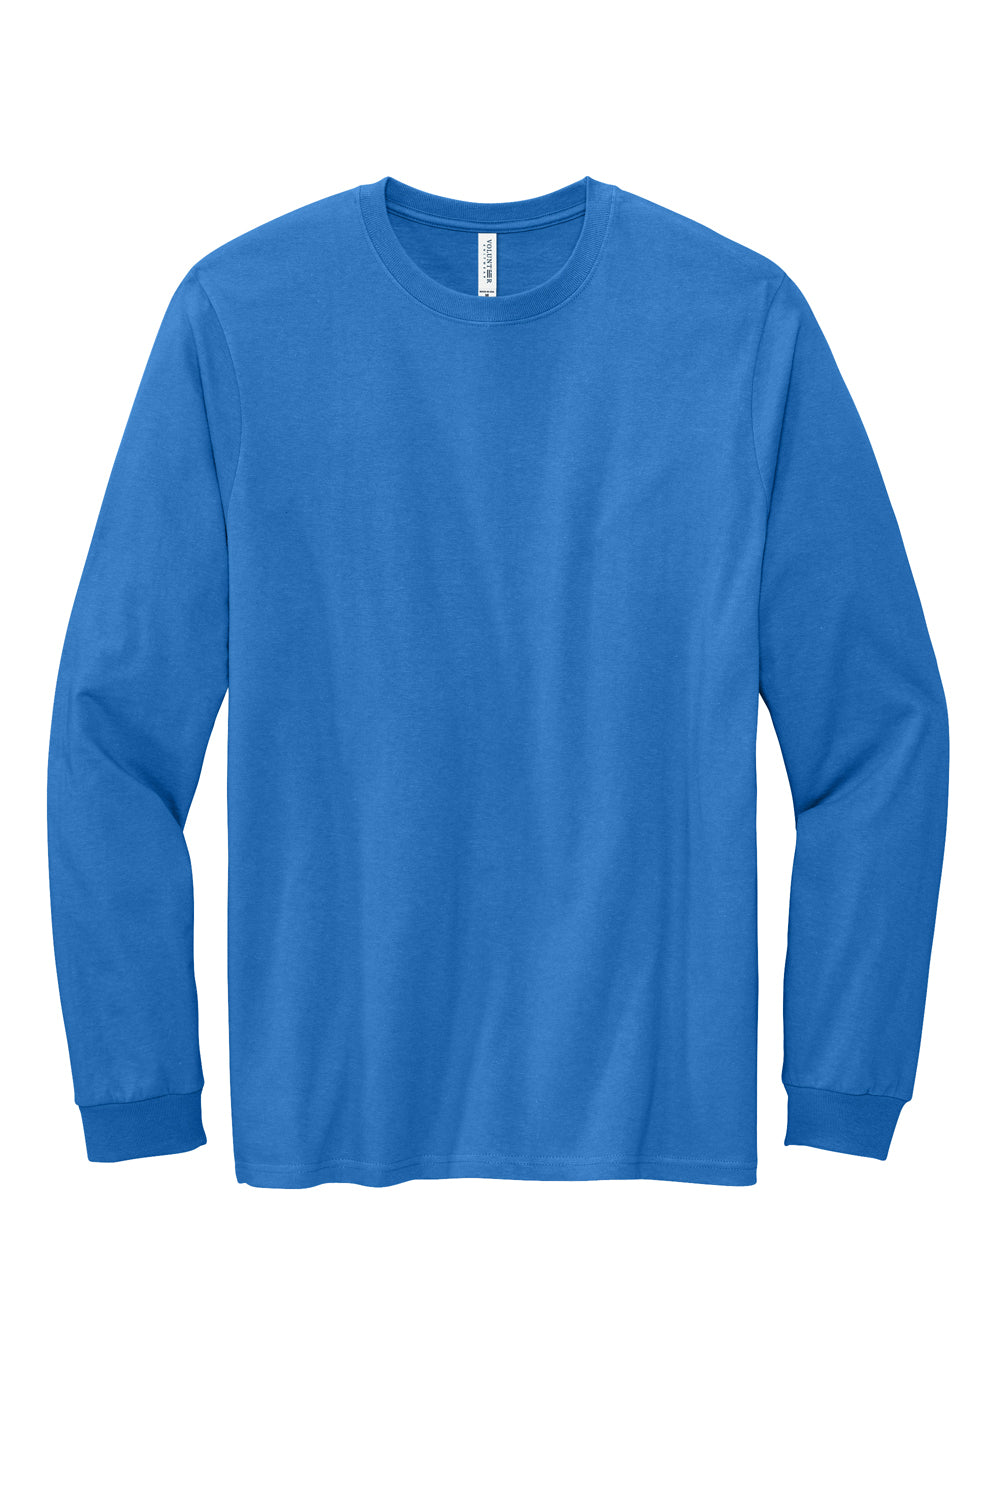 Volunteer Knitwear VL60LS Chore Long Sleeve Crewneck T-Shirt True Royal Blue Flat Front